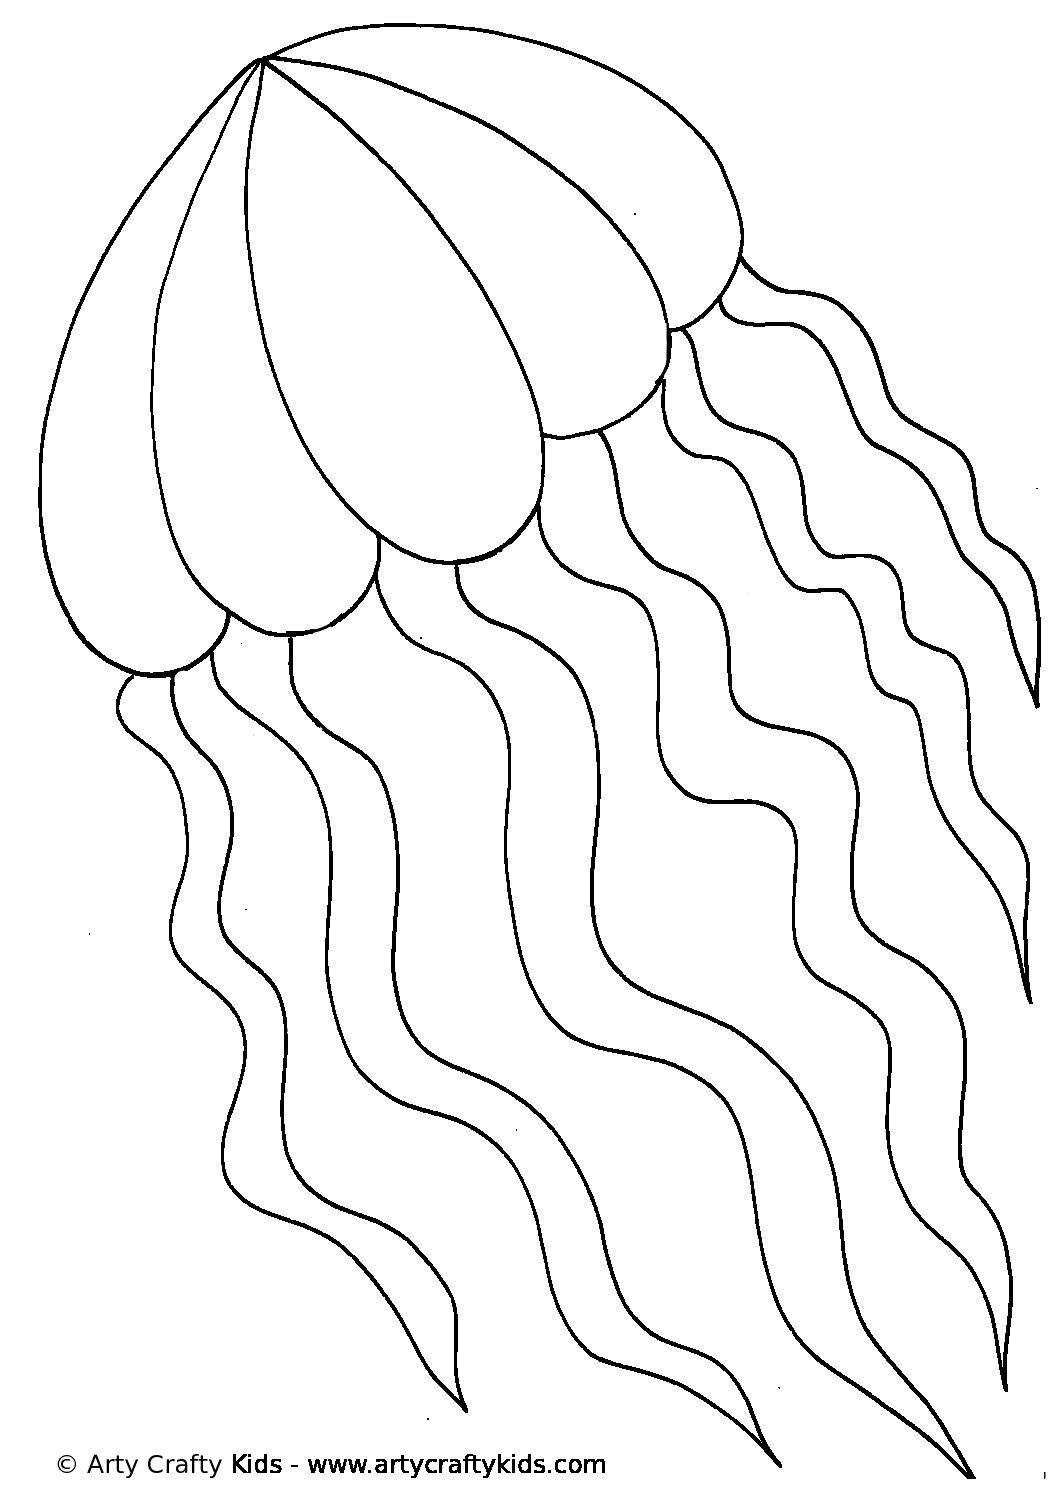 Jellyfish Outline | Arty Crafty Kids